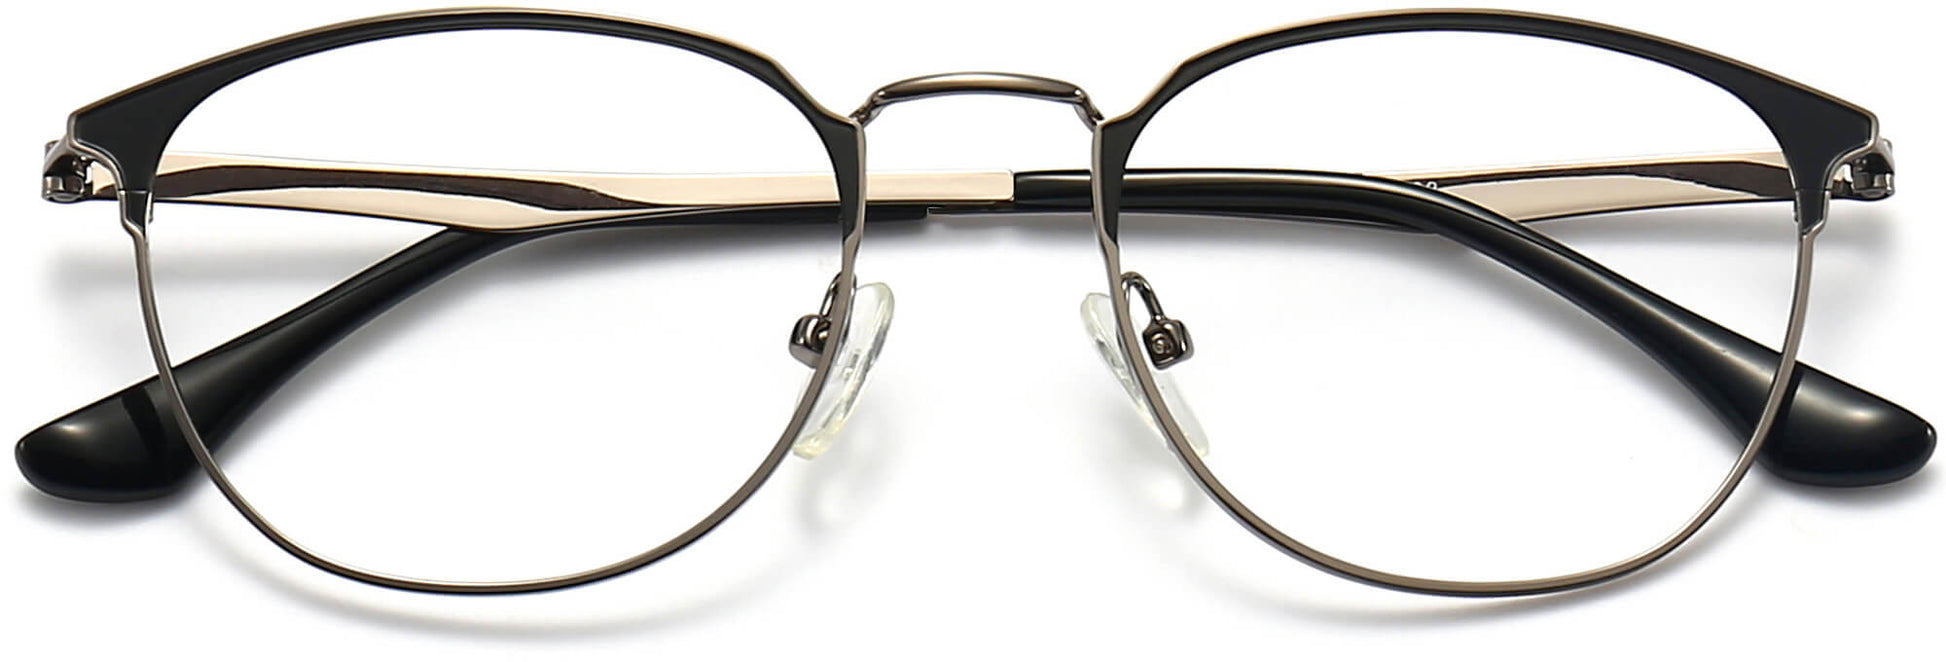 Benson Round Black Eyeglasses from ANRRI, closed view